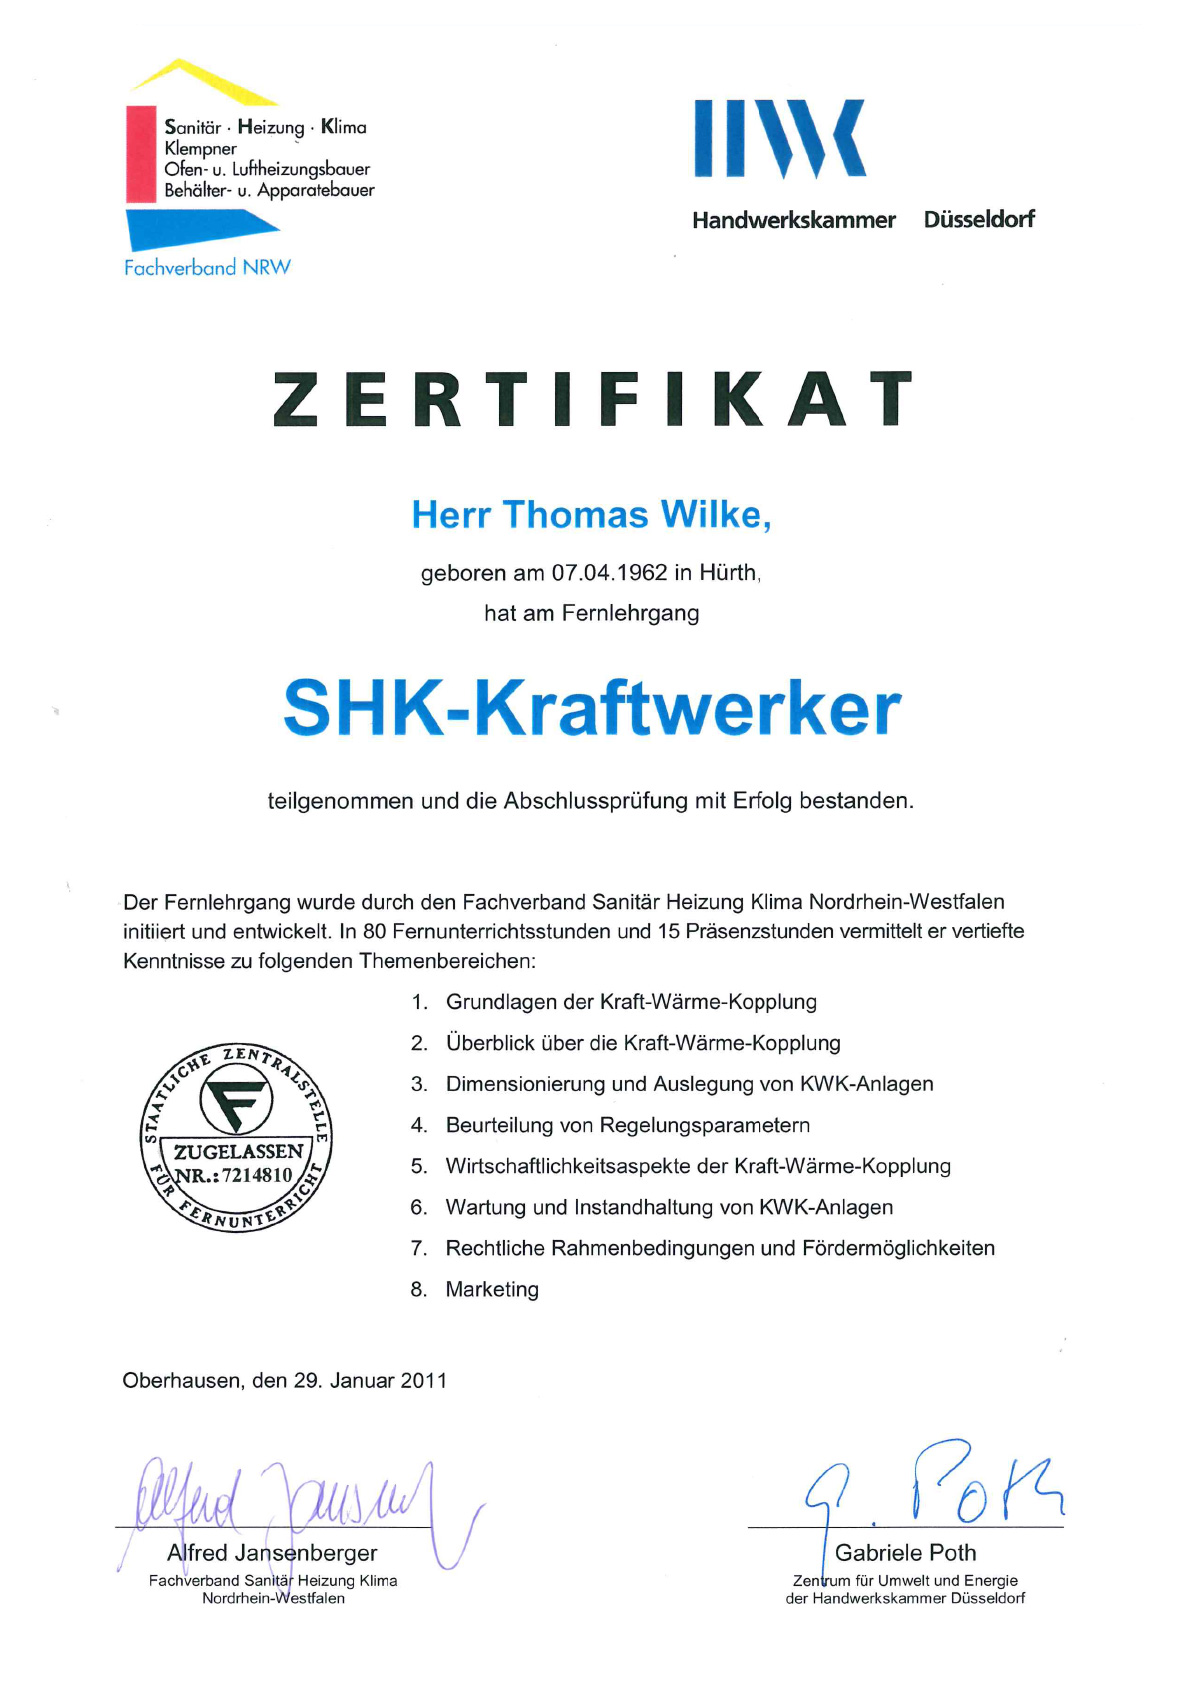 SHK-Kraftwerker (Herr Thomas Wilke)